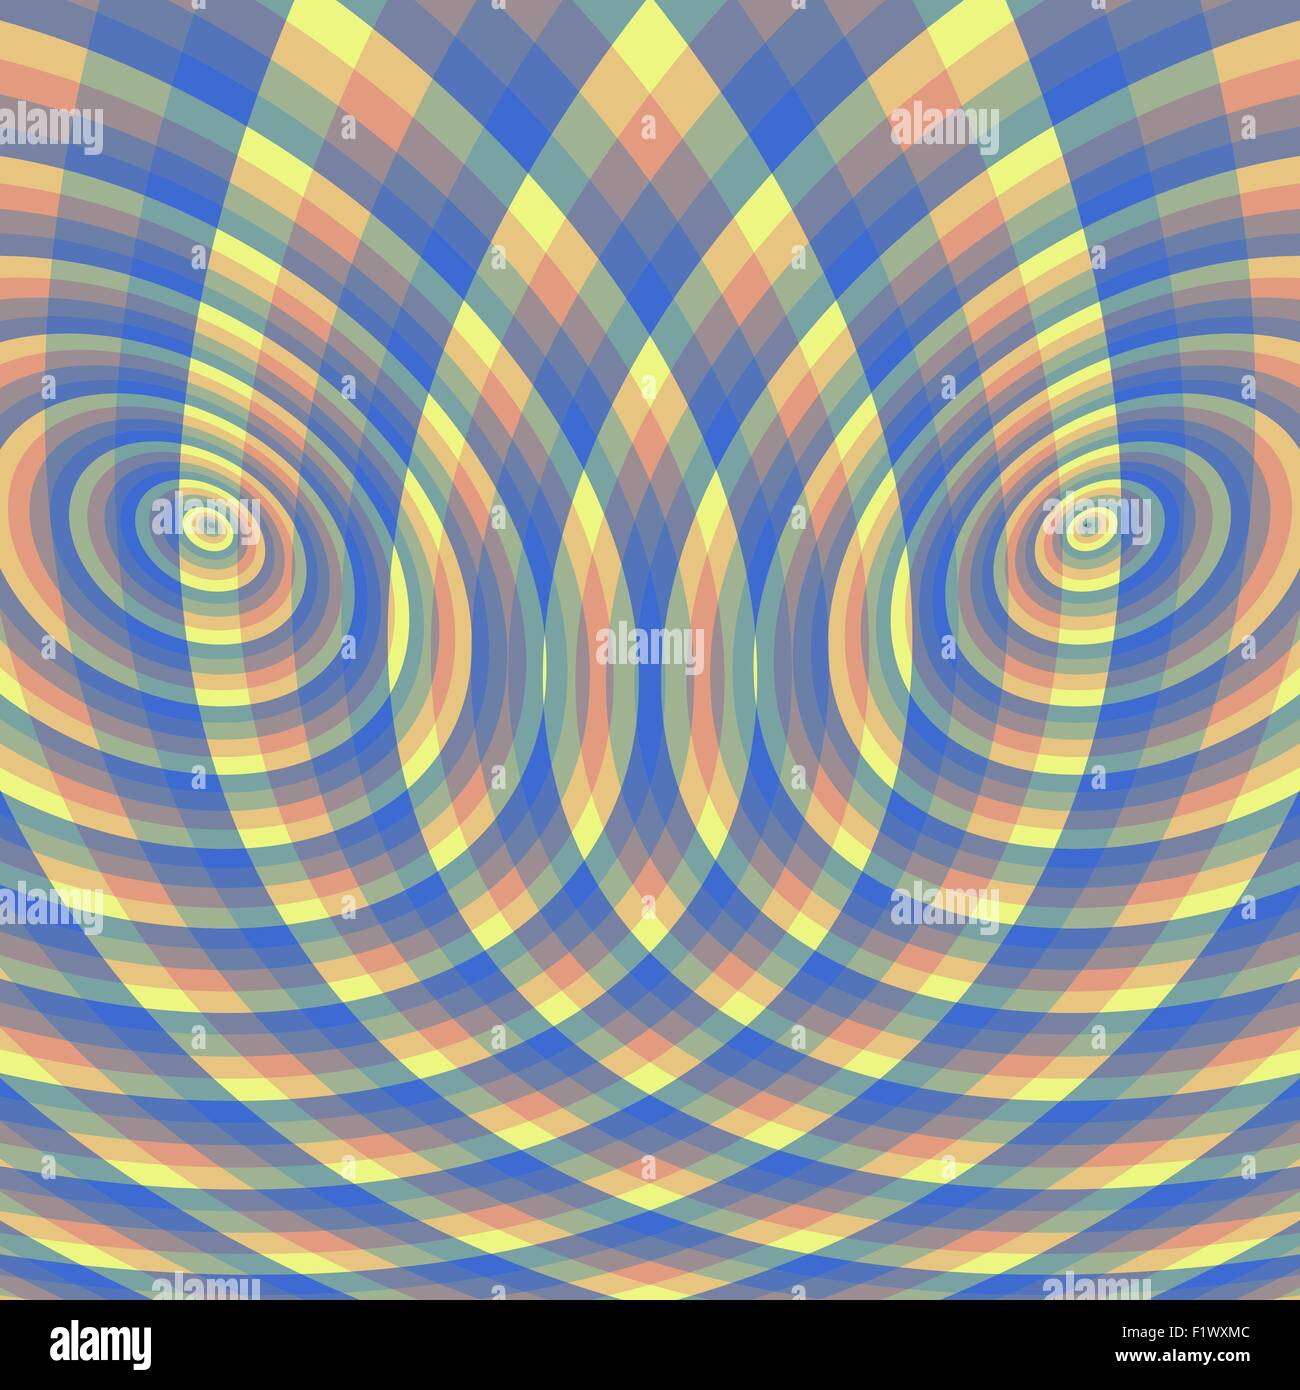 Abstrakten Wirbel Hintergrund. Muster mit optische Täuschung. Vektor-Illustration. Stock Vektor